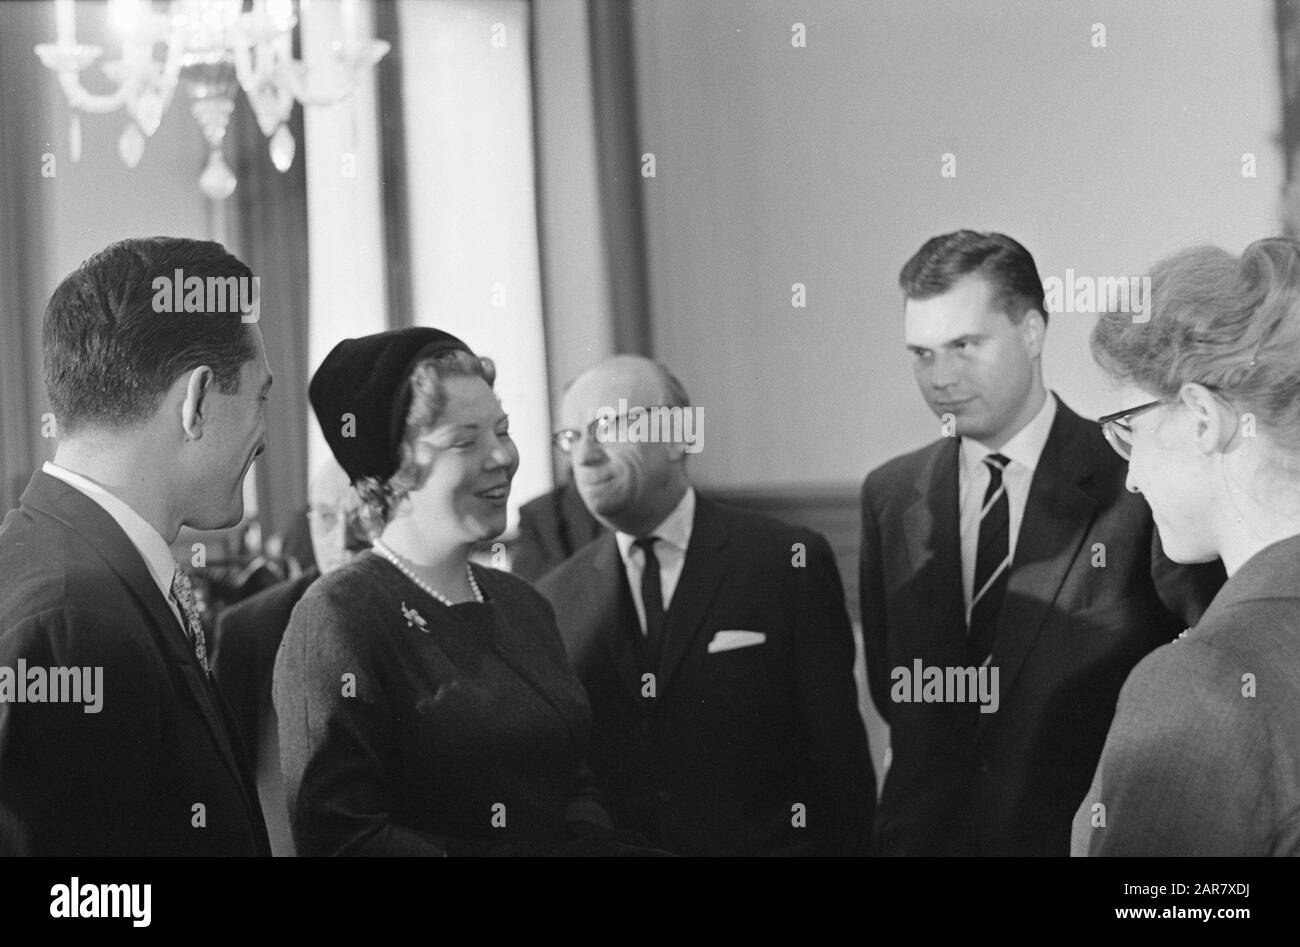 Princess Beatrix patron Inventory Asylfonds at RijksC. Utrecht speaks with refugees Date: November 18, 1961 Location: Utrecht Keywords: REGENTS, patron women Personal name: Beatrix, princess Stock Photo